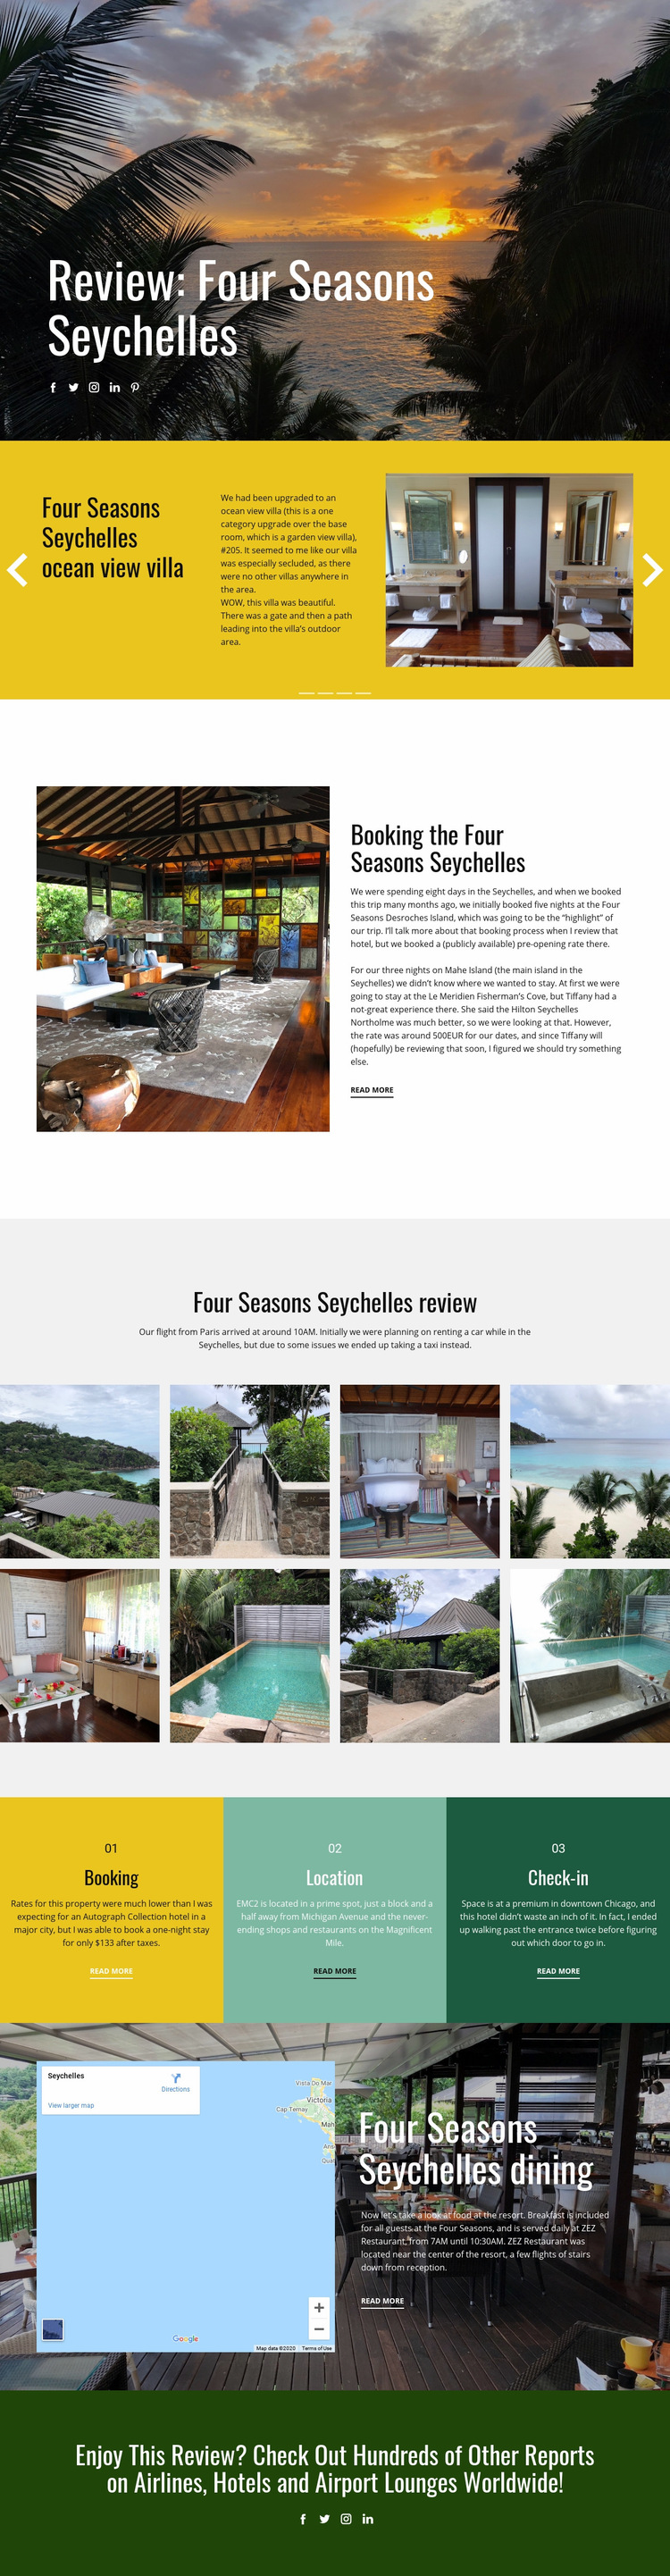 Four Seasons Web Page Design